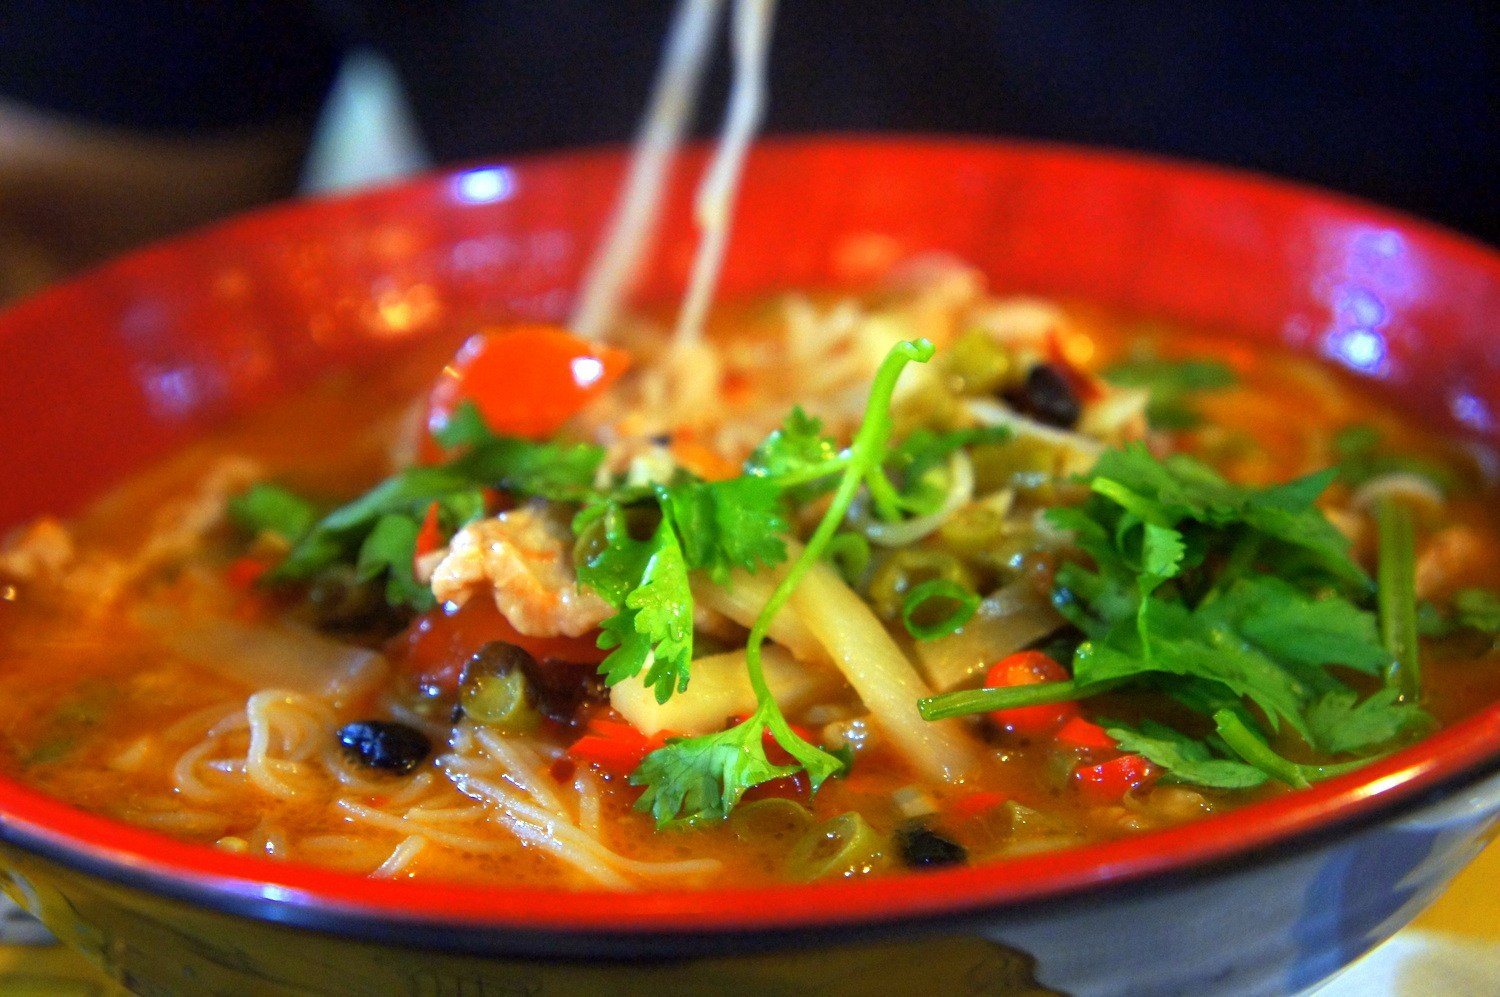 Dongguan Expat Life - eating a bowl of spicy soup.